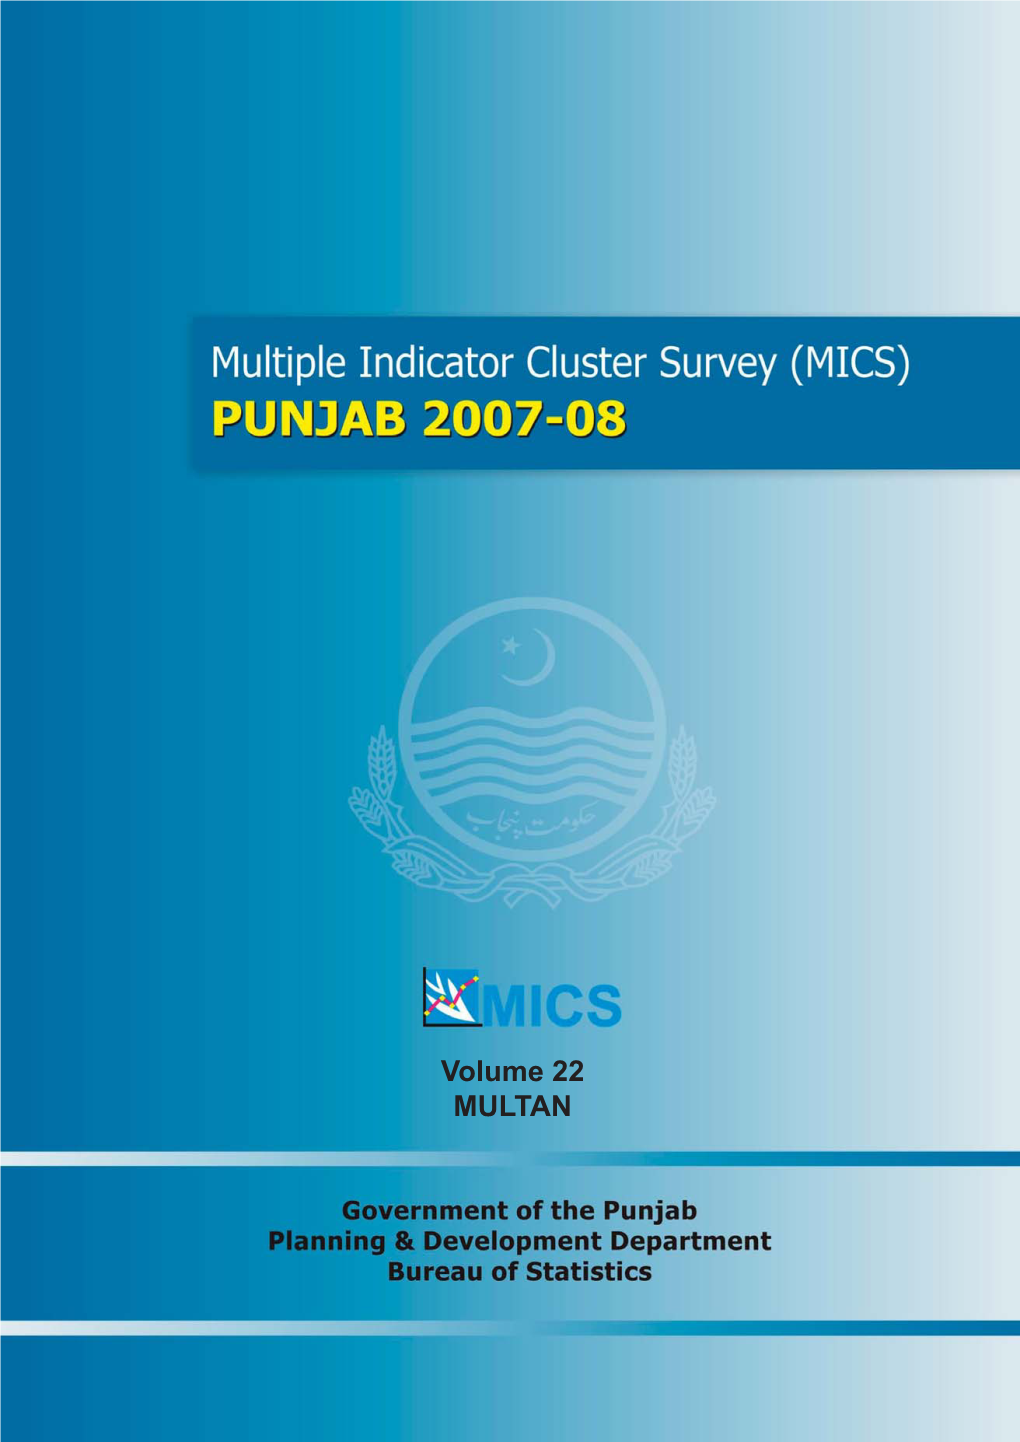 Volume 22 MULTAN Multiple Indicator Cluster Survey (MICS) Punjab 2007-08